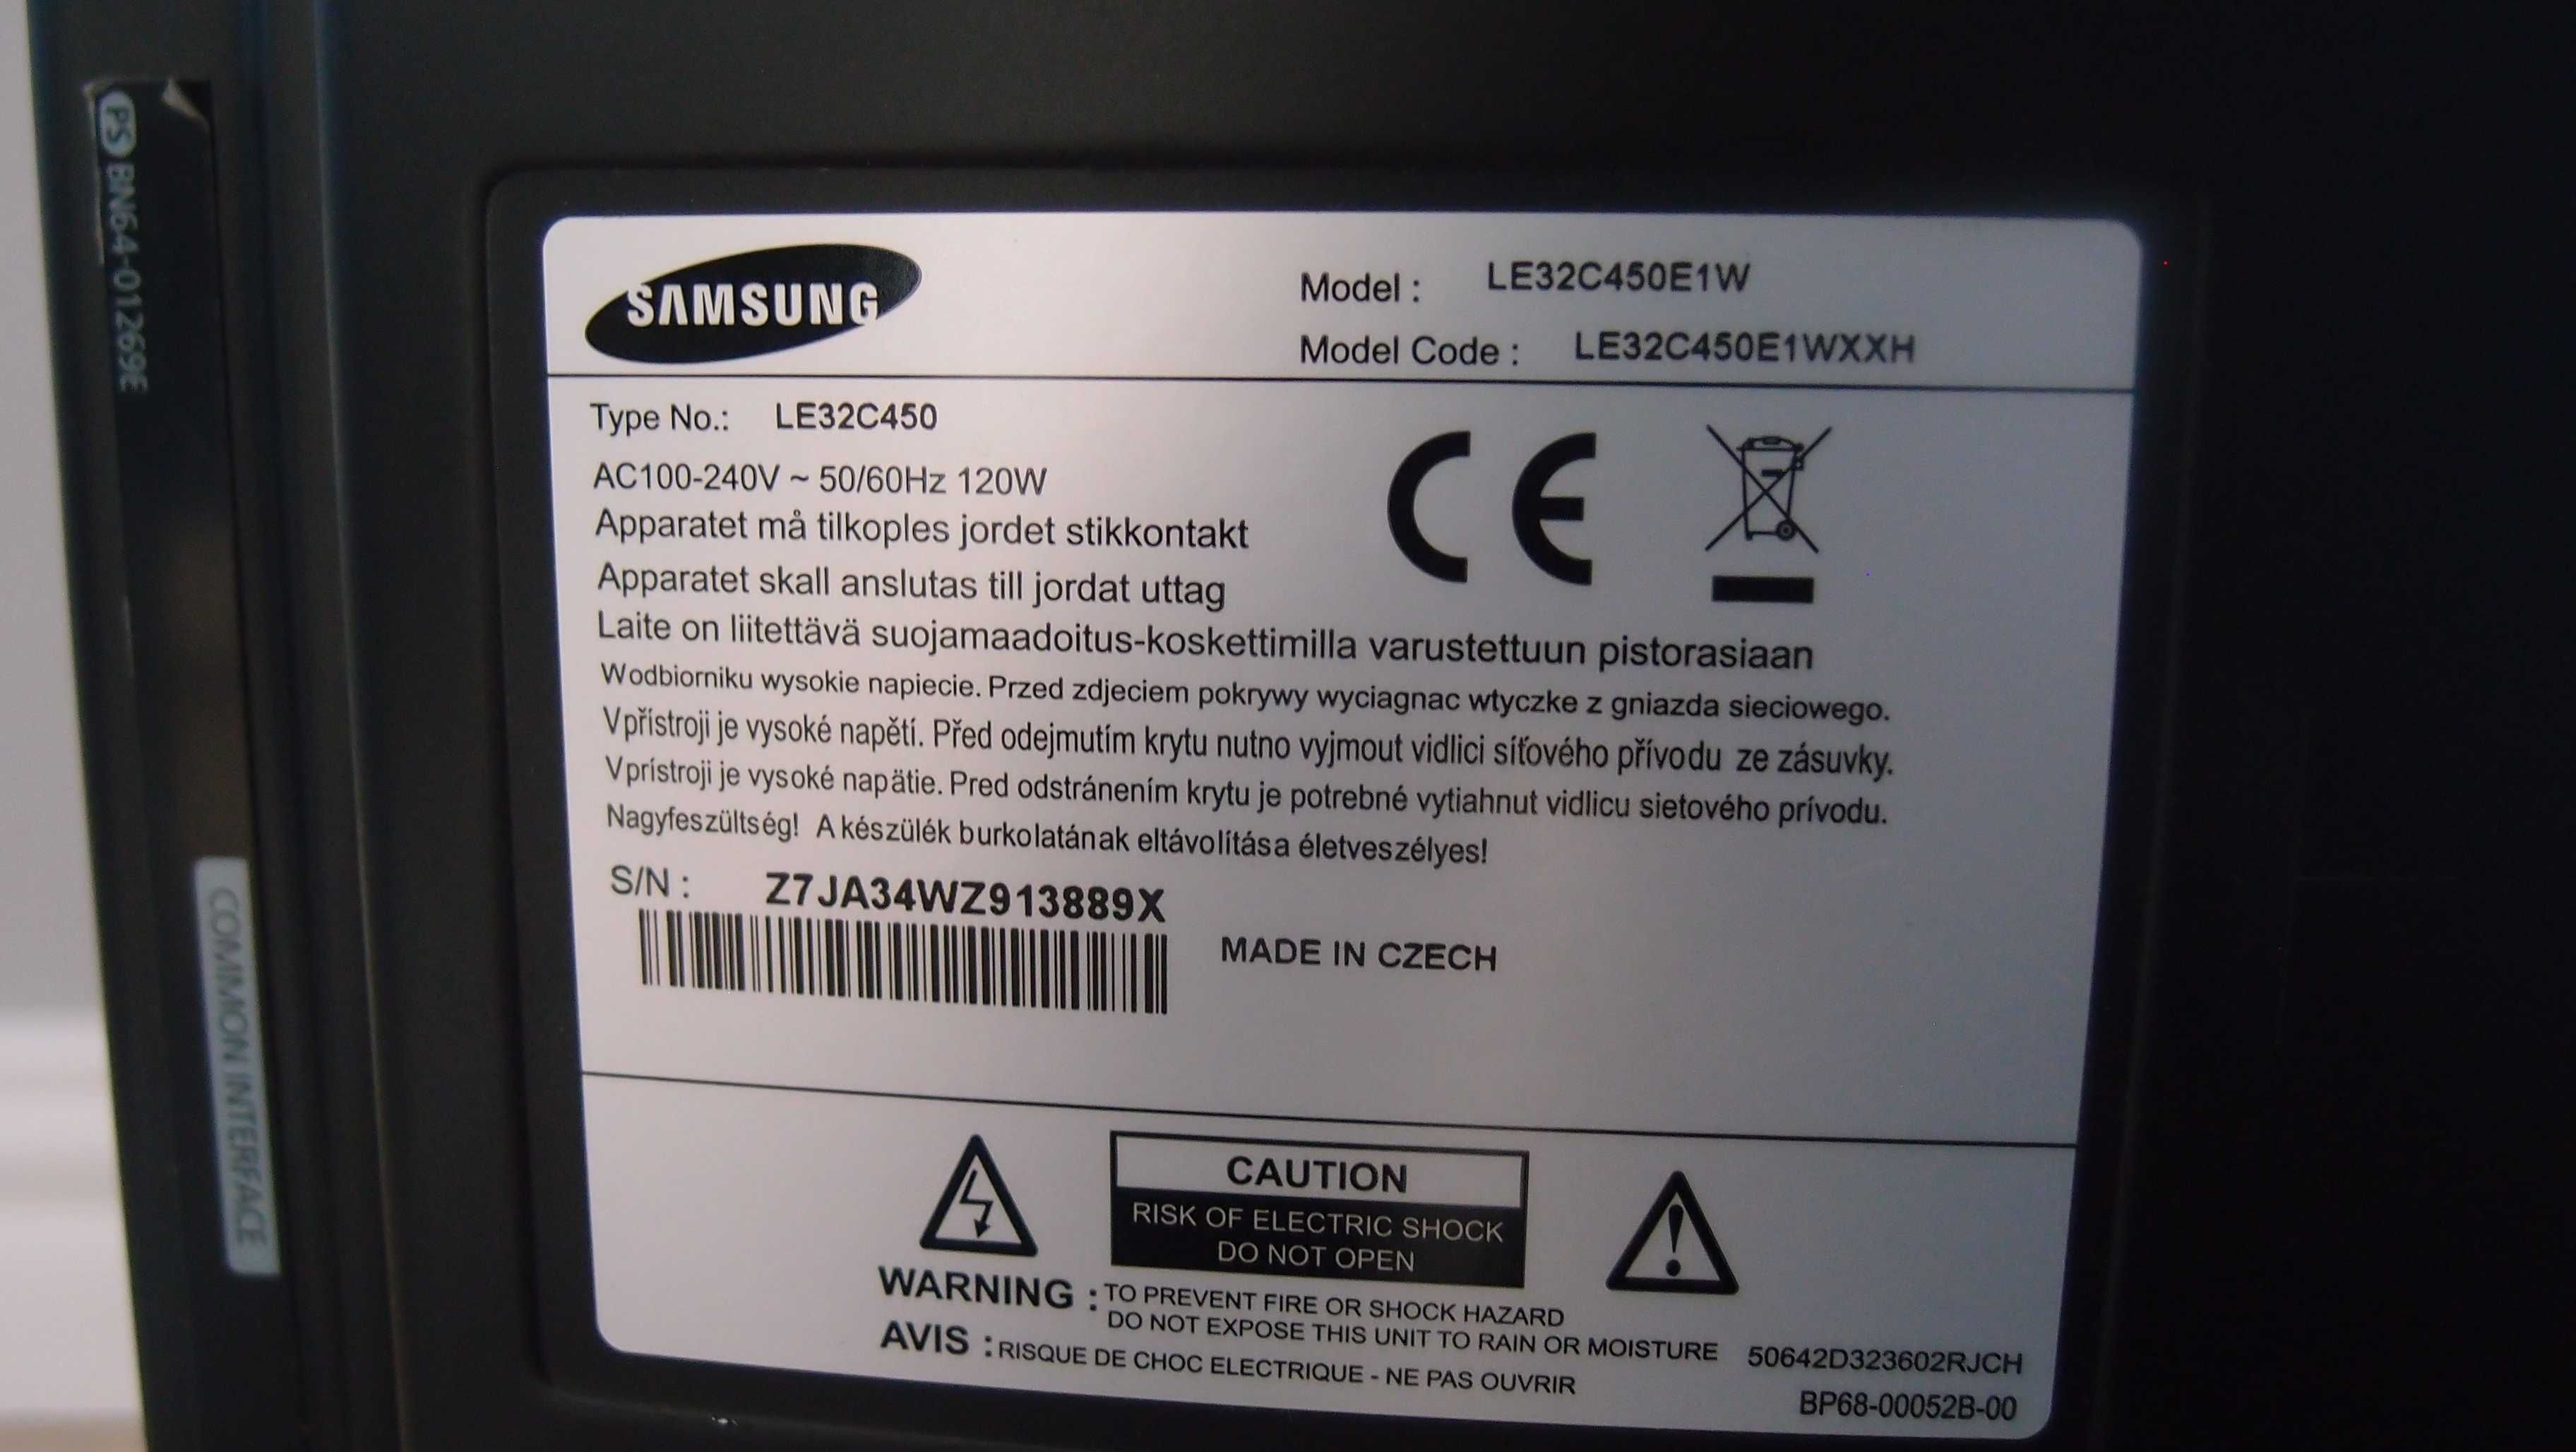 telewizor Samsung LE32C450E1W 32 cale + kabel + uchwyt + pilot